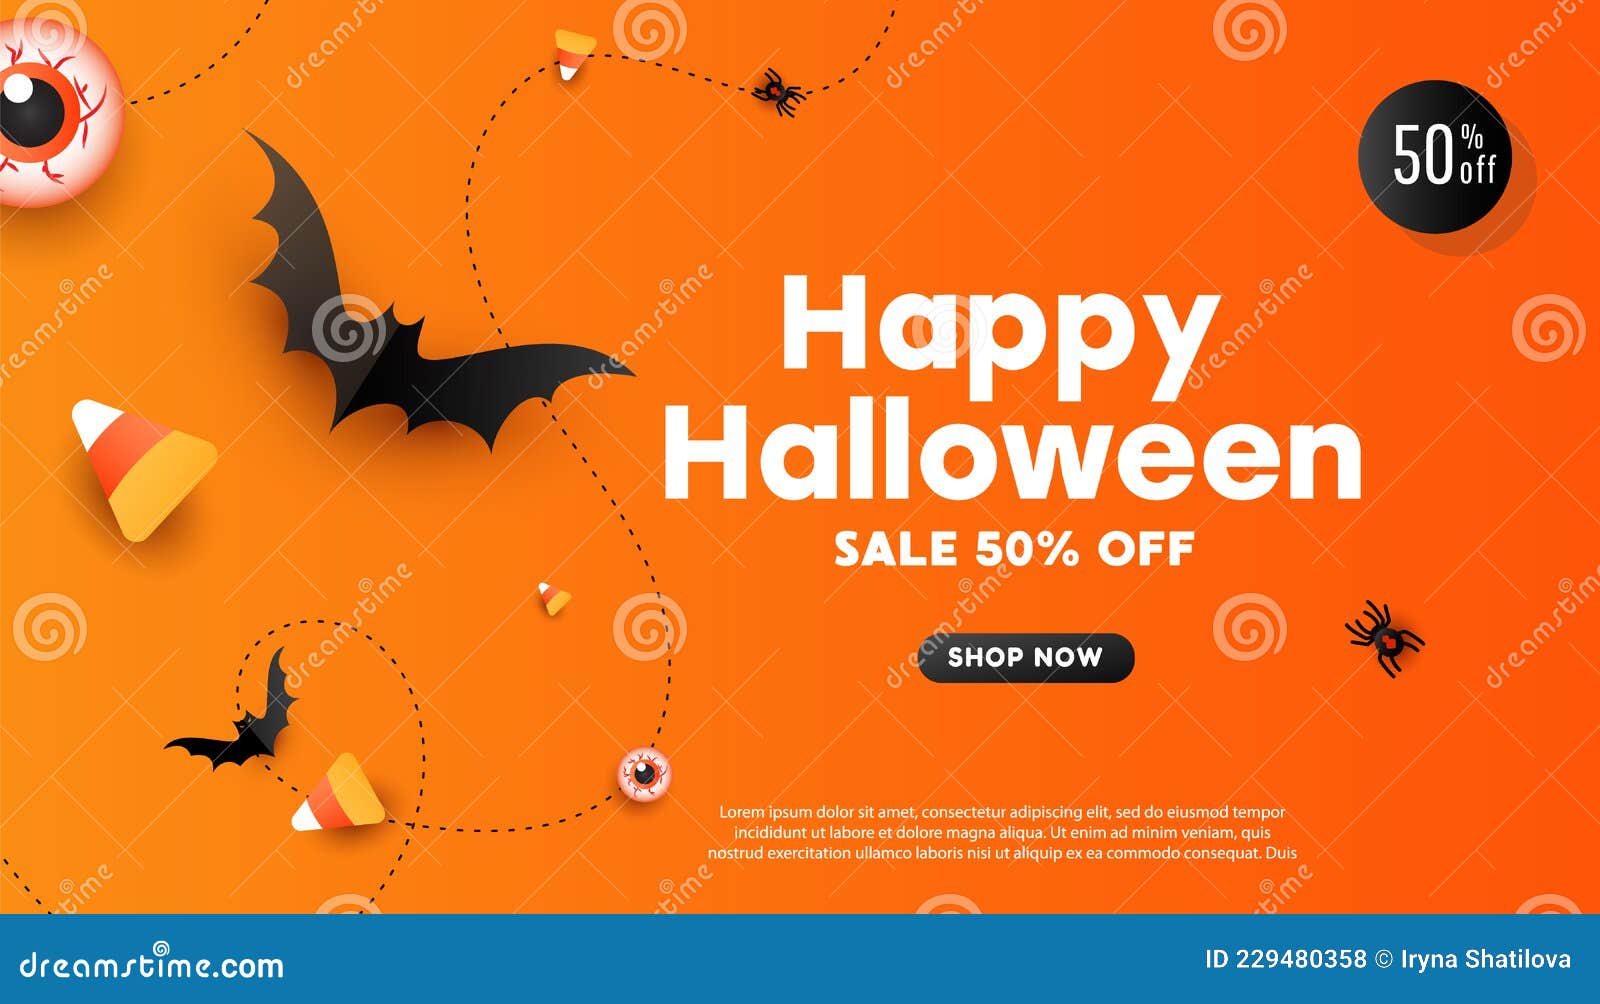 Happy Halloween Holiday Concept. Halloween Decorations, Spiders ...